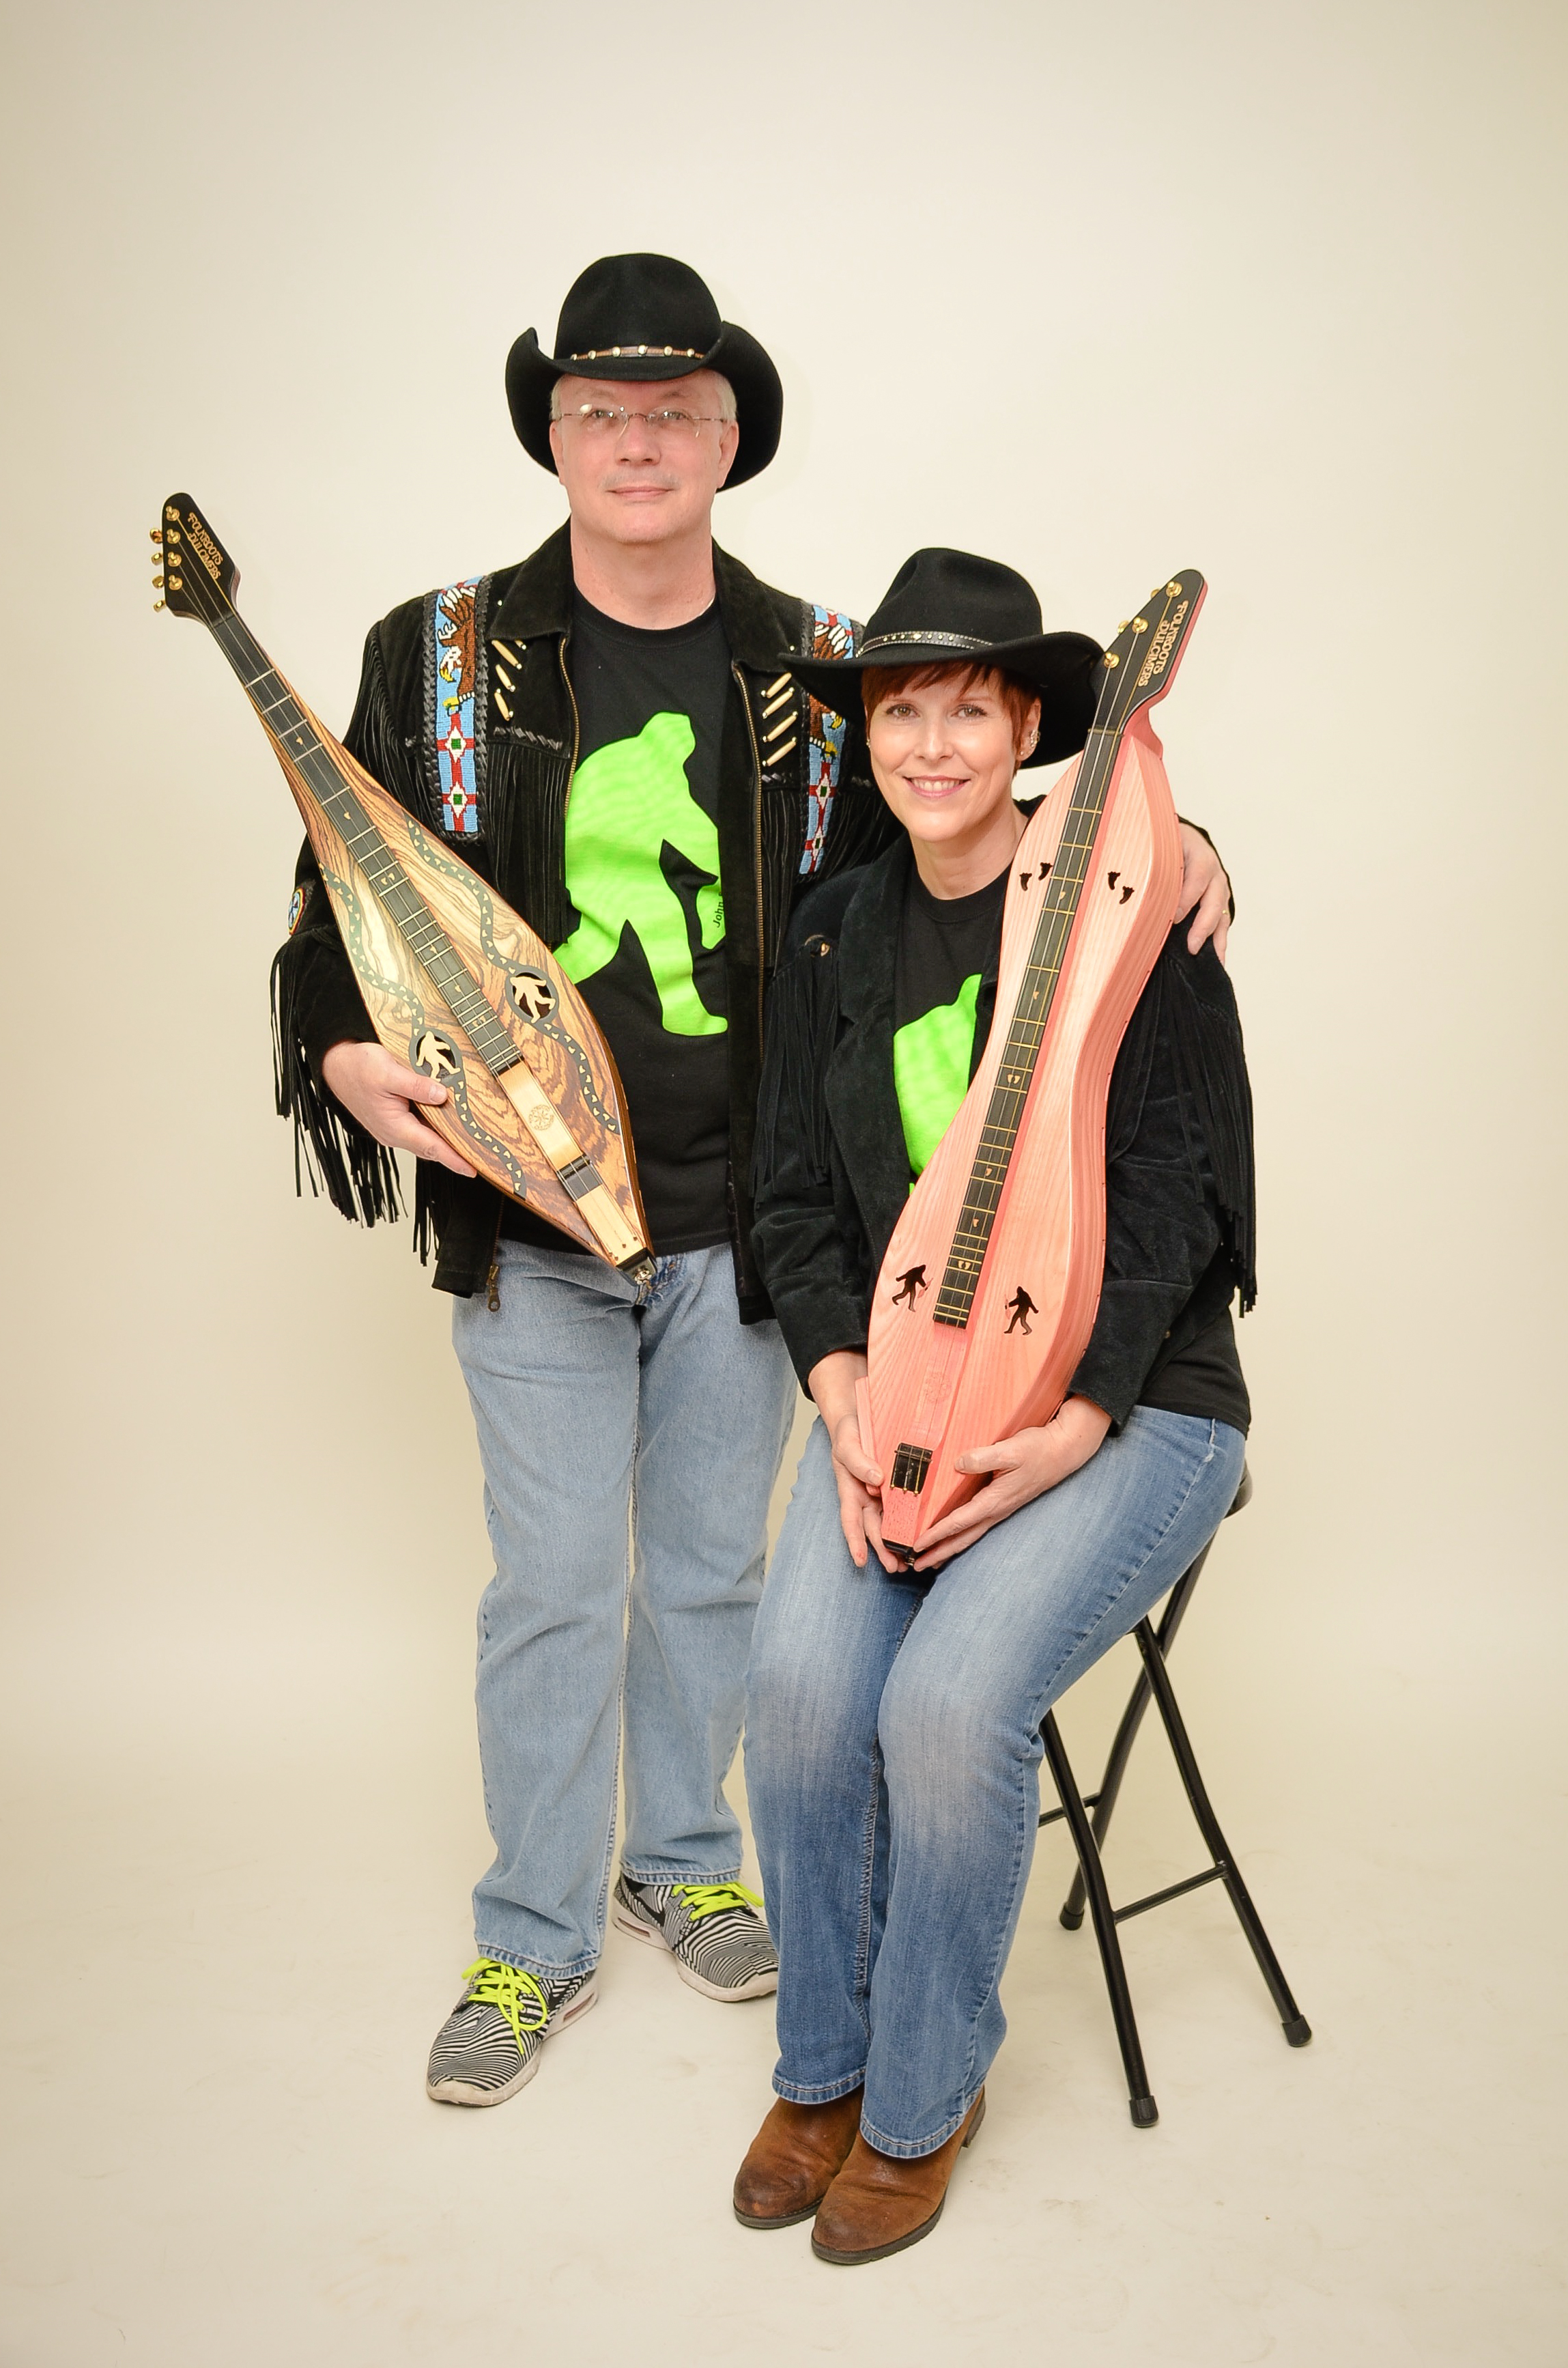 John and Karen Keane with their custom-made Big Foot themed Folkcraft dulcimers.